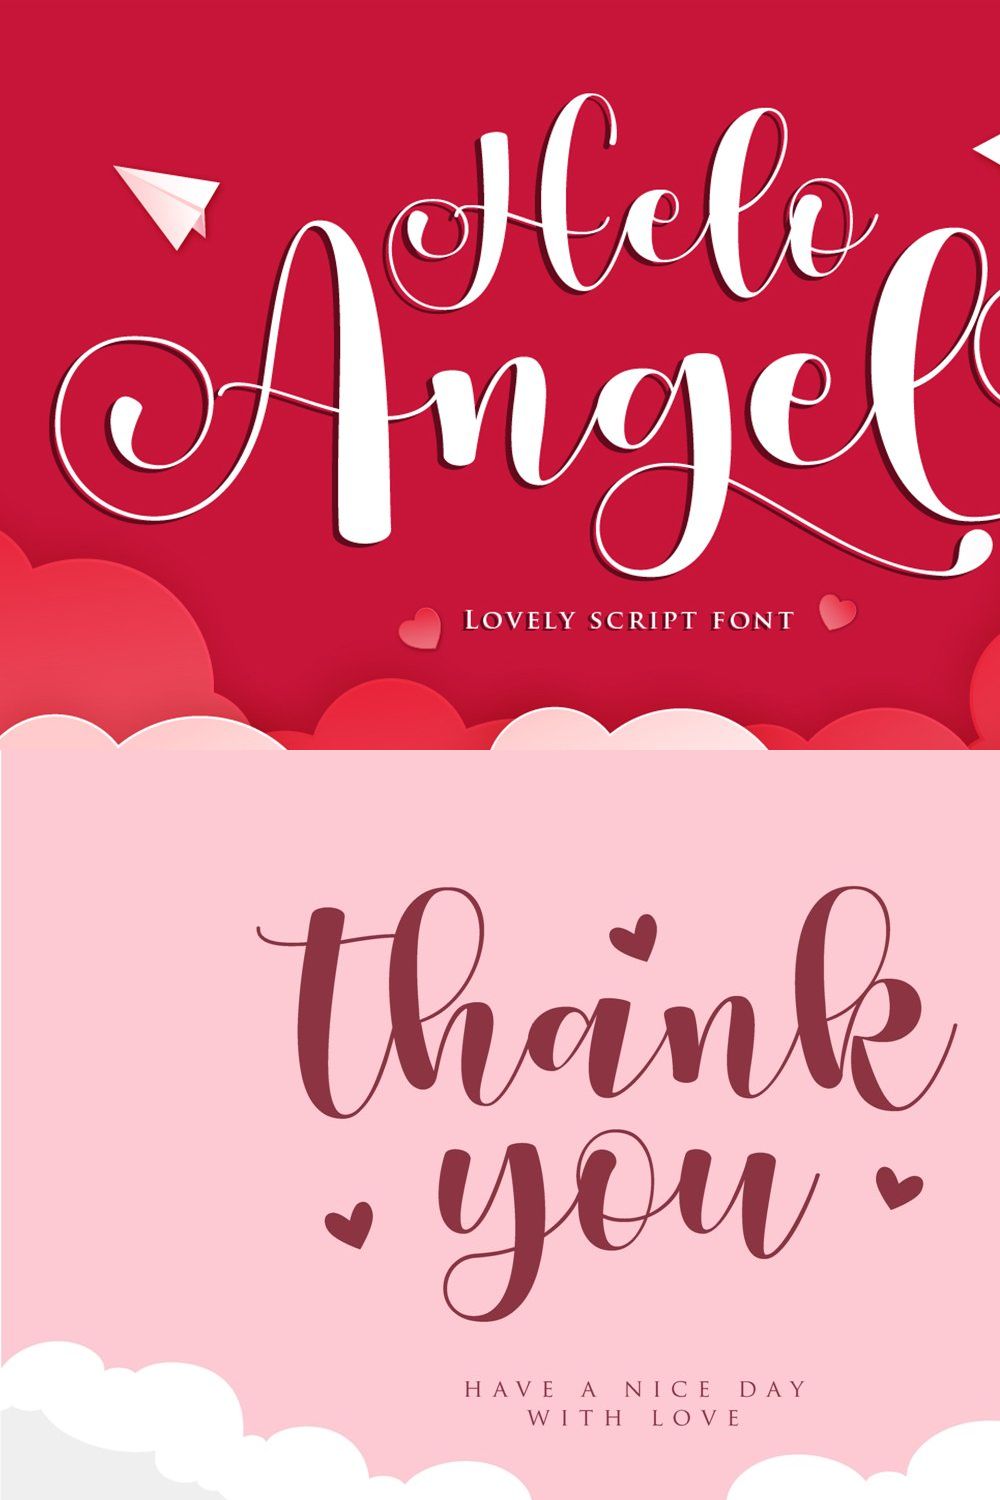 Helo Angel | Lovely Script Font pinterest preview image.